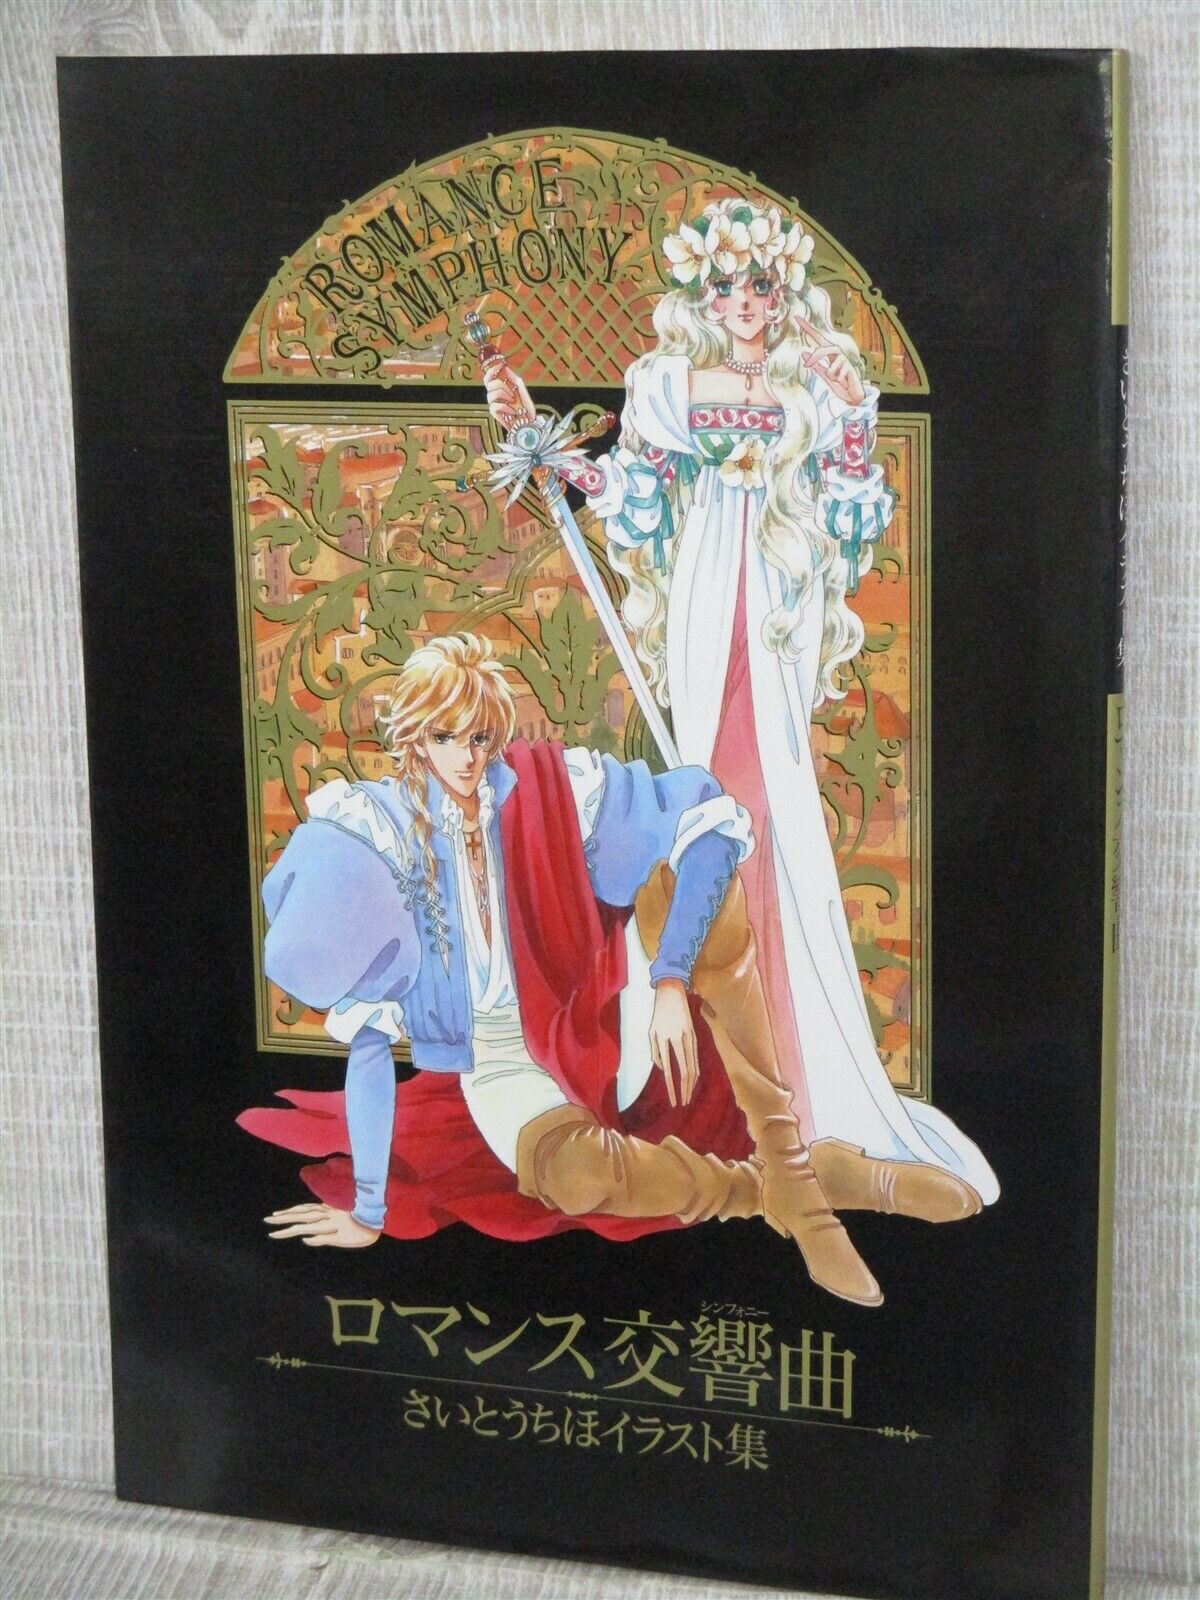 CHIHO SAITO Illustration Art Book ROMANCE SYMPHONY w/Poster 1994 Utena SG17